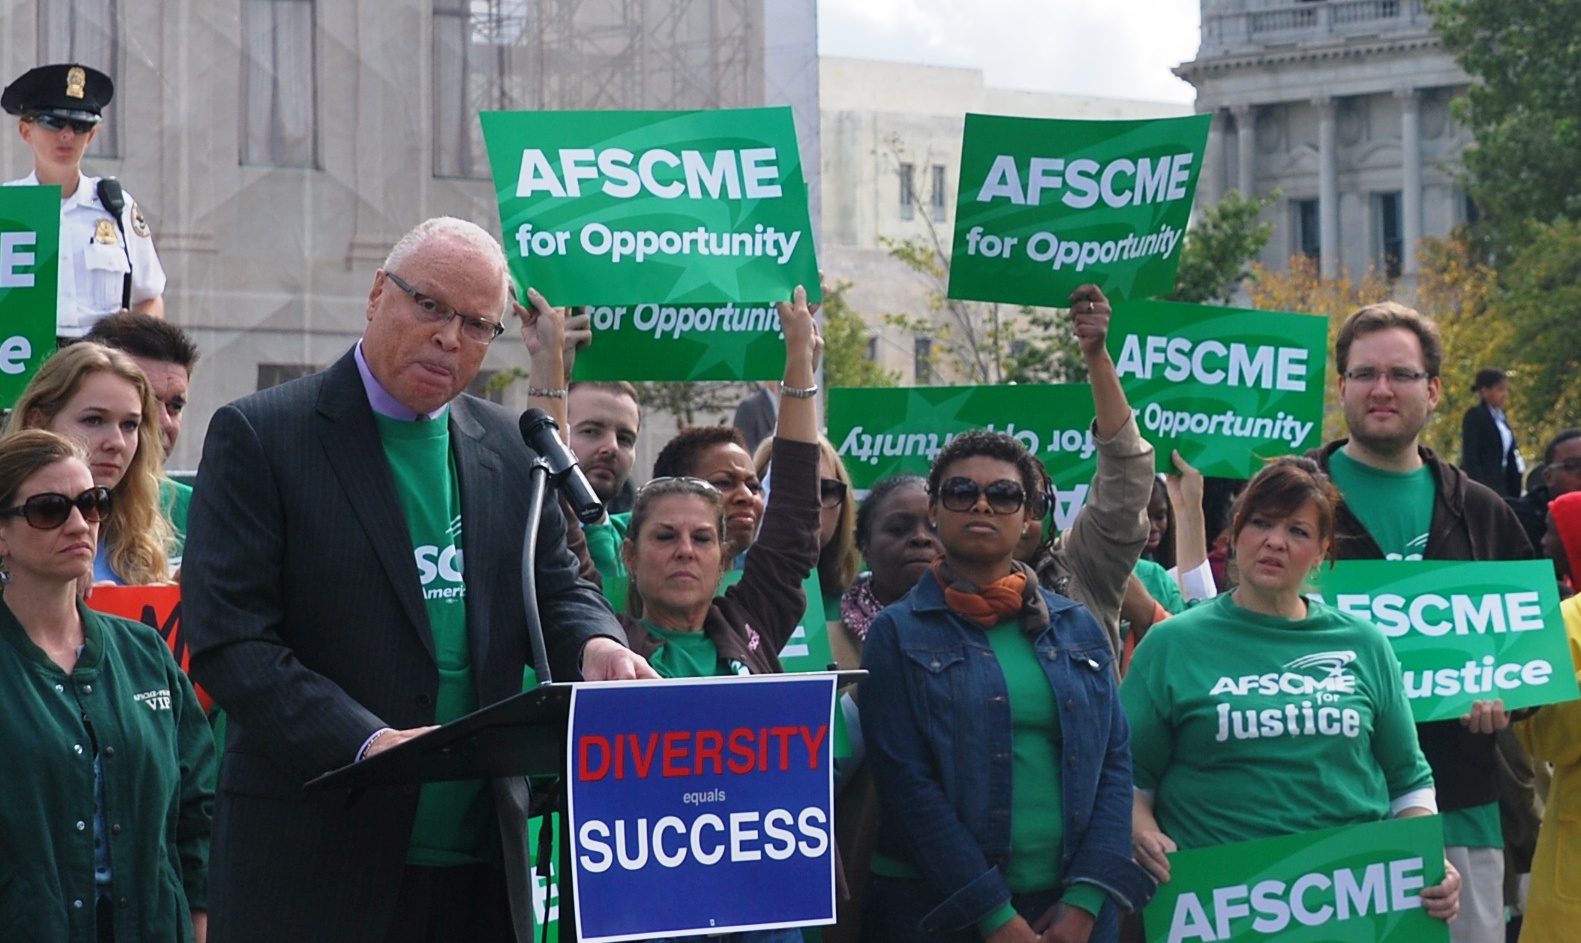 AFSCME spends members’ dues on progressive politics